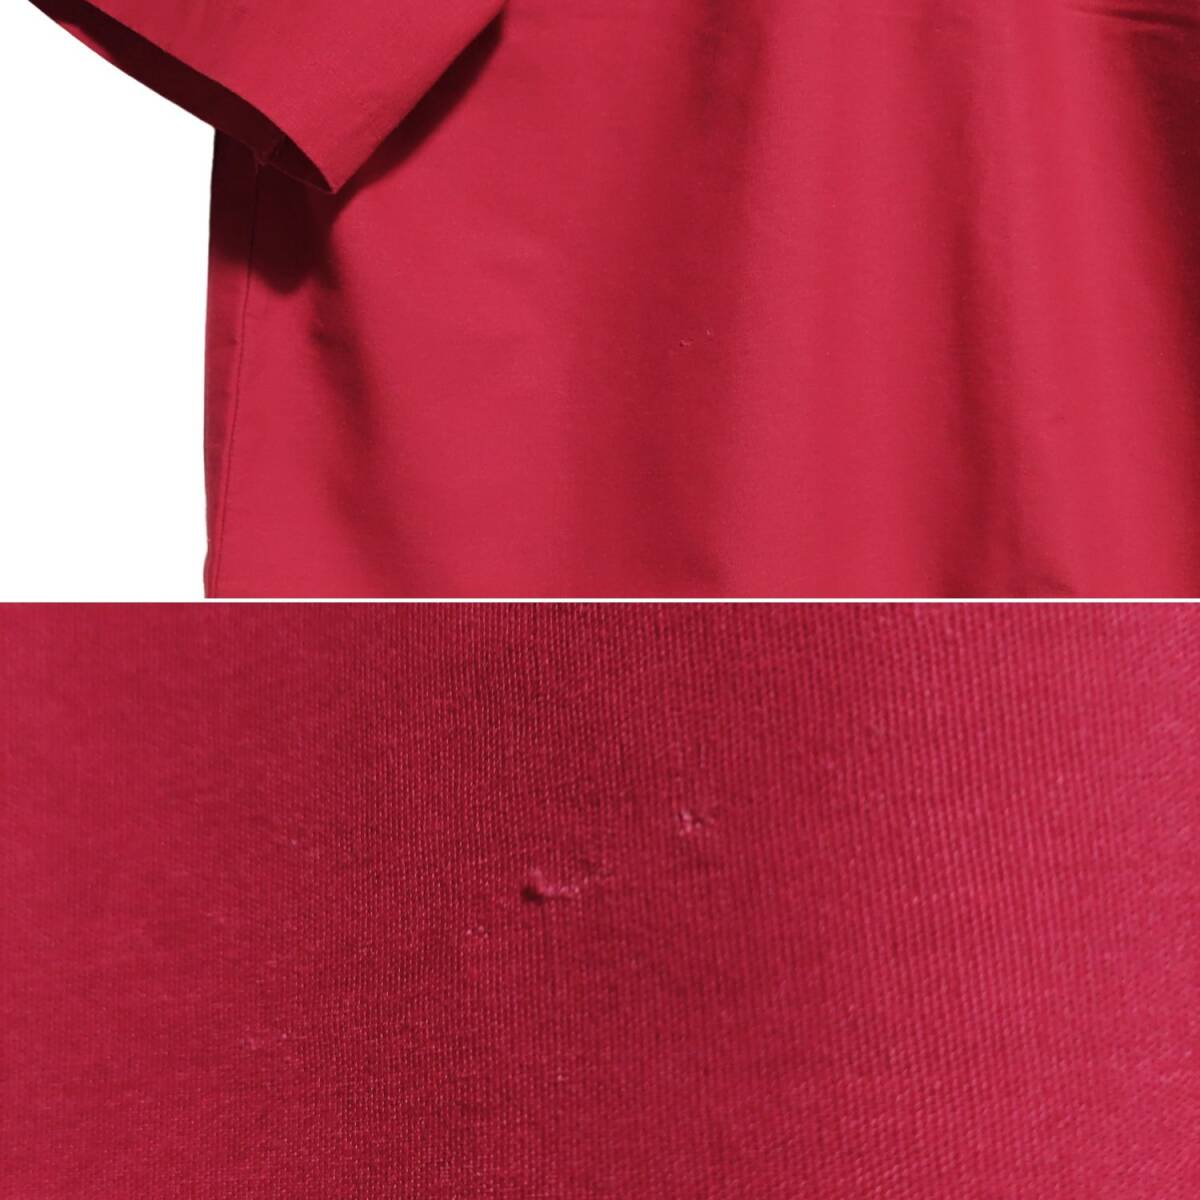 SpotliteLX 半袖ワークシャツ size 17.5 オーバーサイズ レッド ゆうパケットポスト可 胸 ロゴ 刺繍 Coca・Cola 古着 洗濯 プレス済 f17_画像7